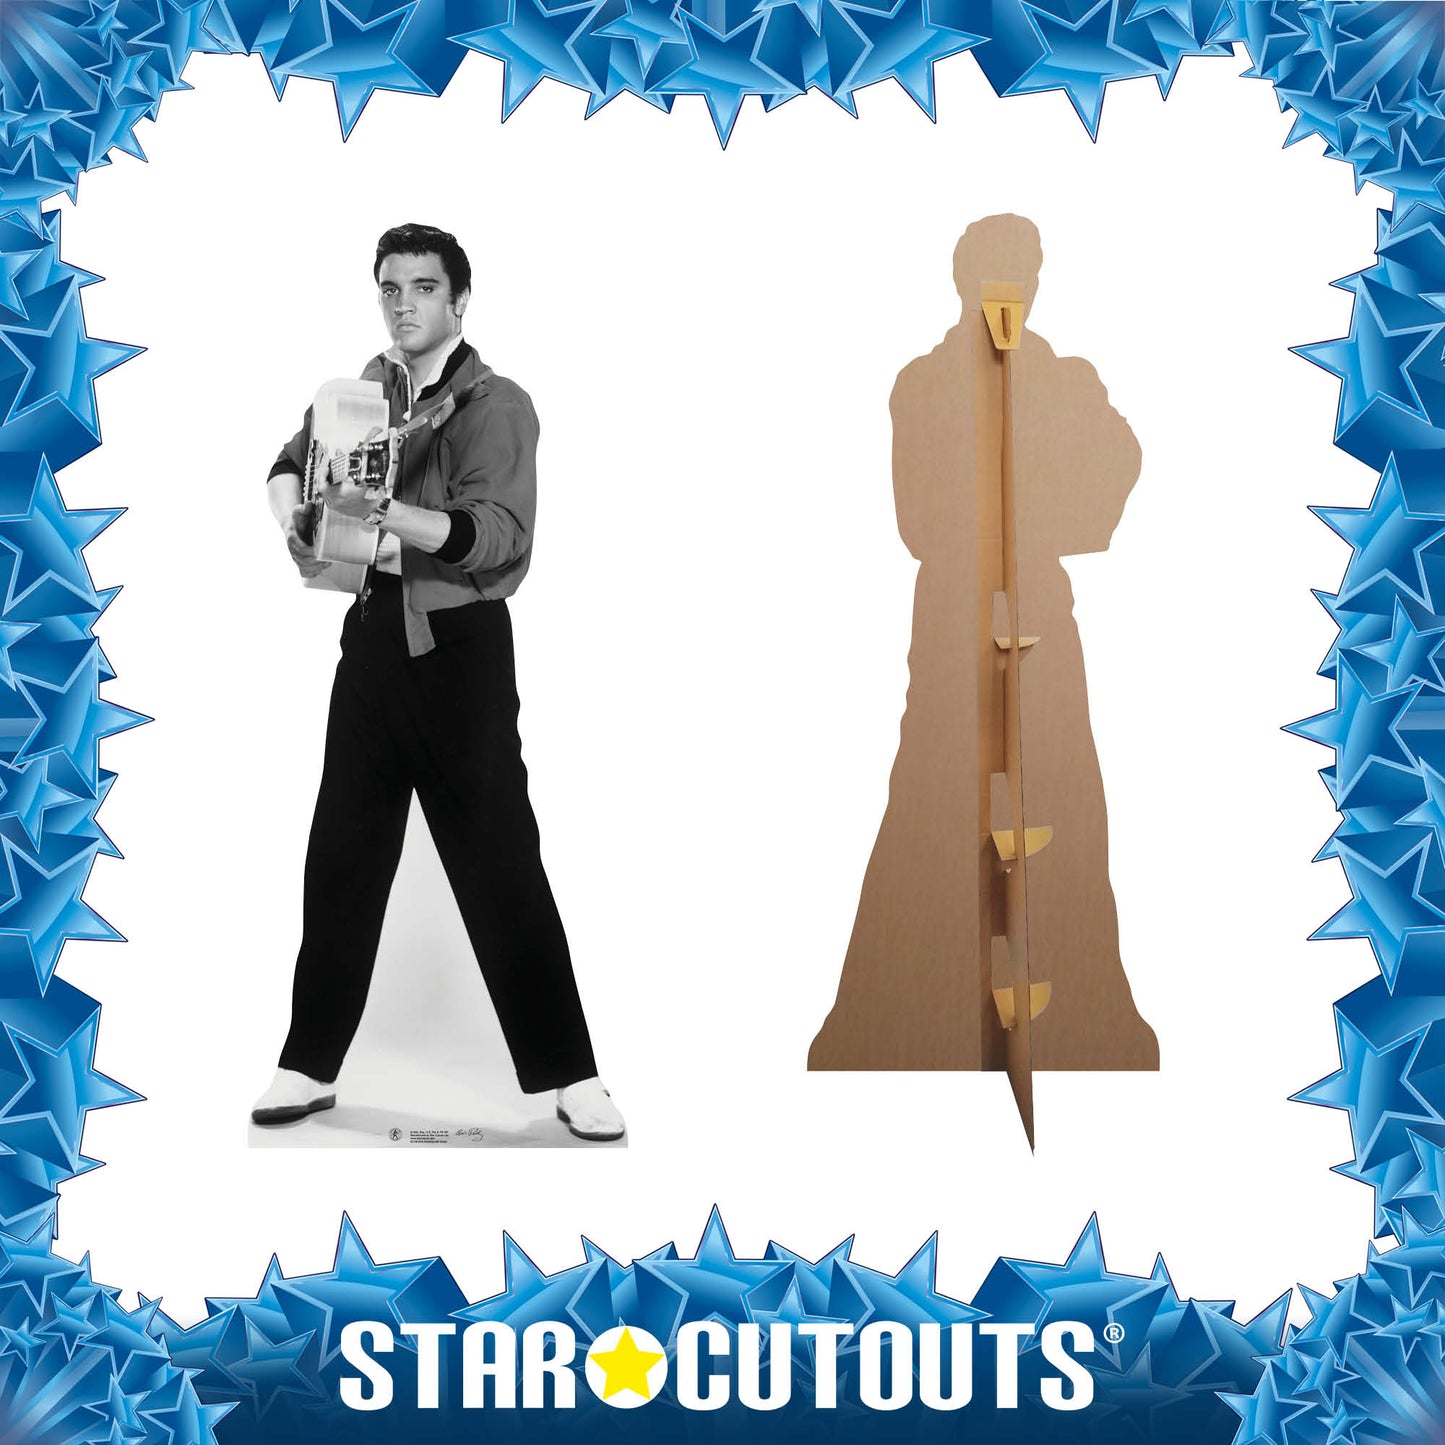 Elvis Shooting with Guitar Pose Cardboard Cutout MyCardboardCutout